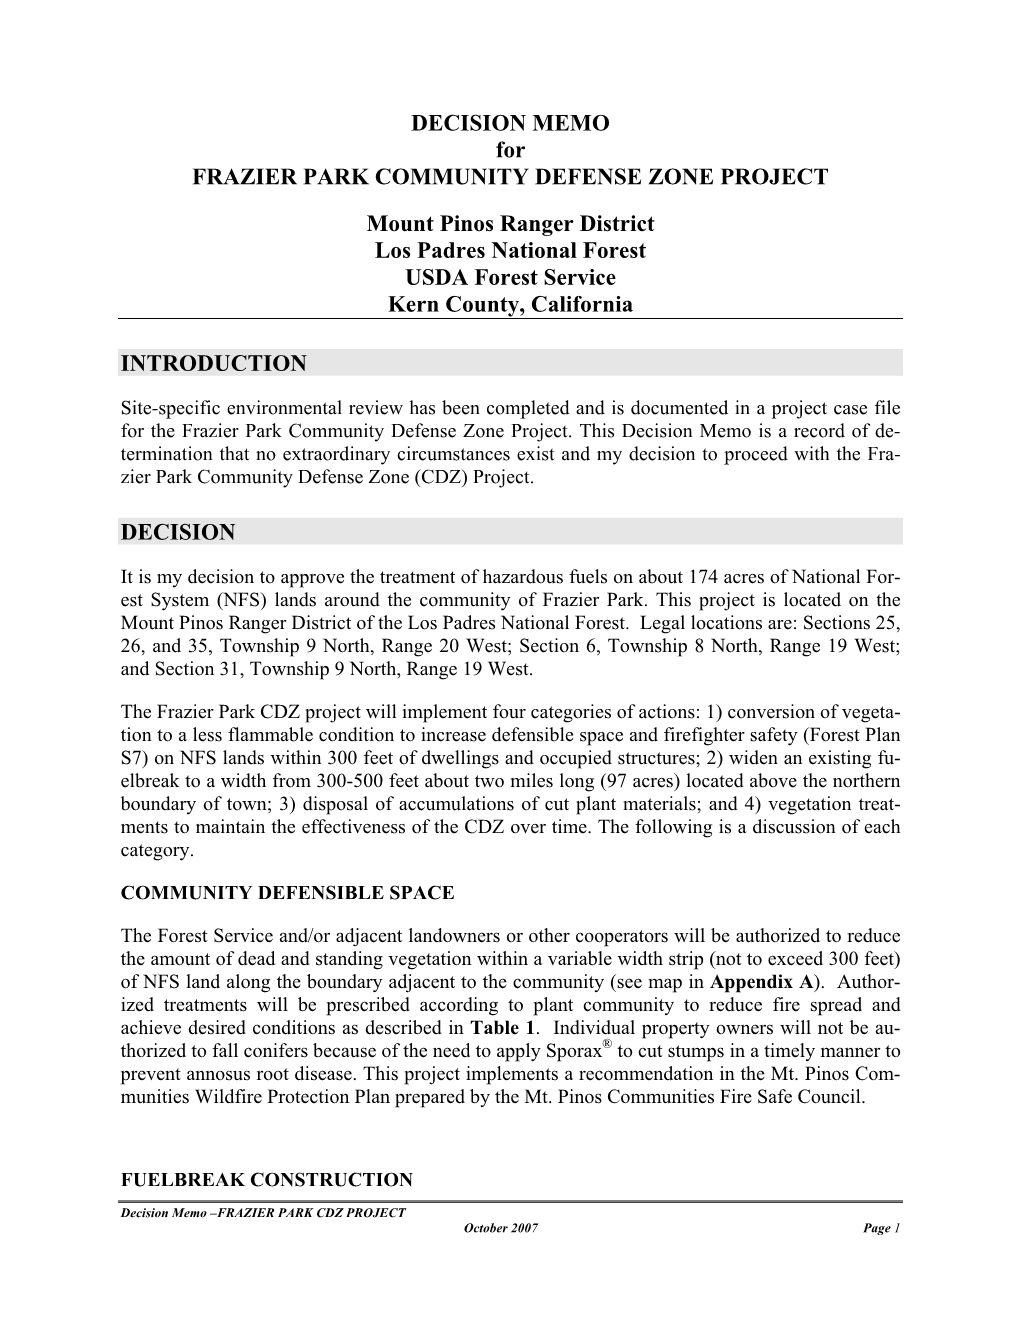 DECISION MEMO for FRAZIER PARK COMMUNITY DEFENSE ZONE PROJECT